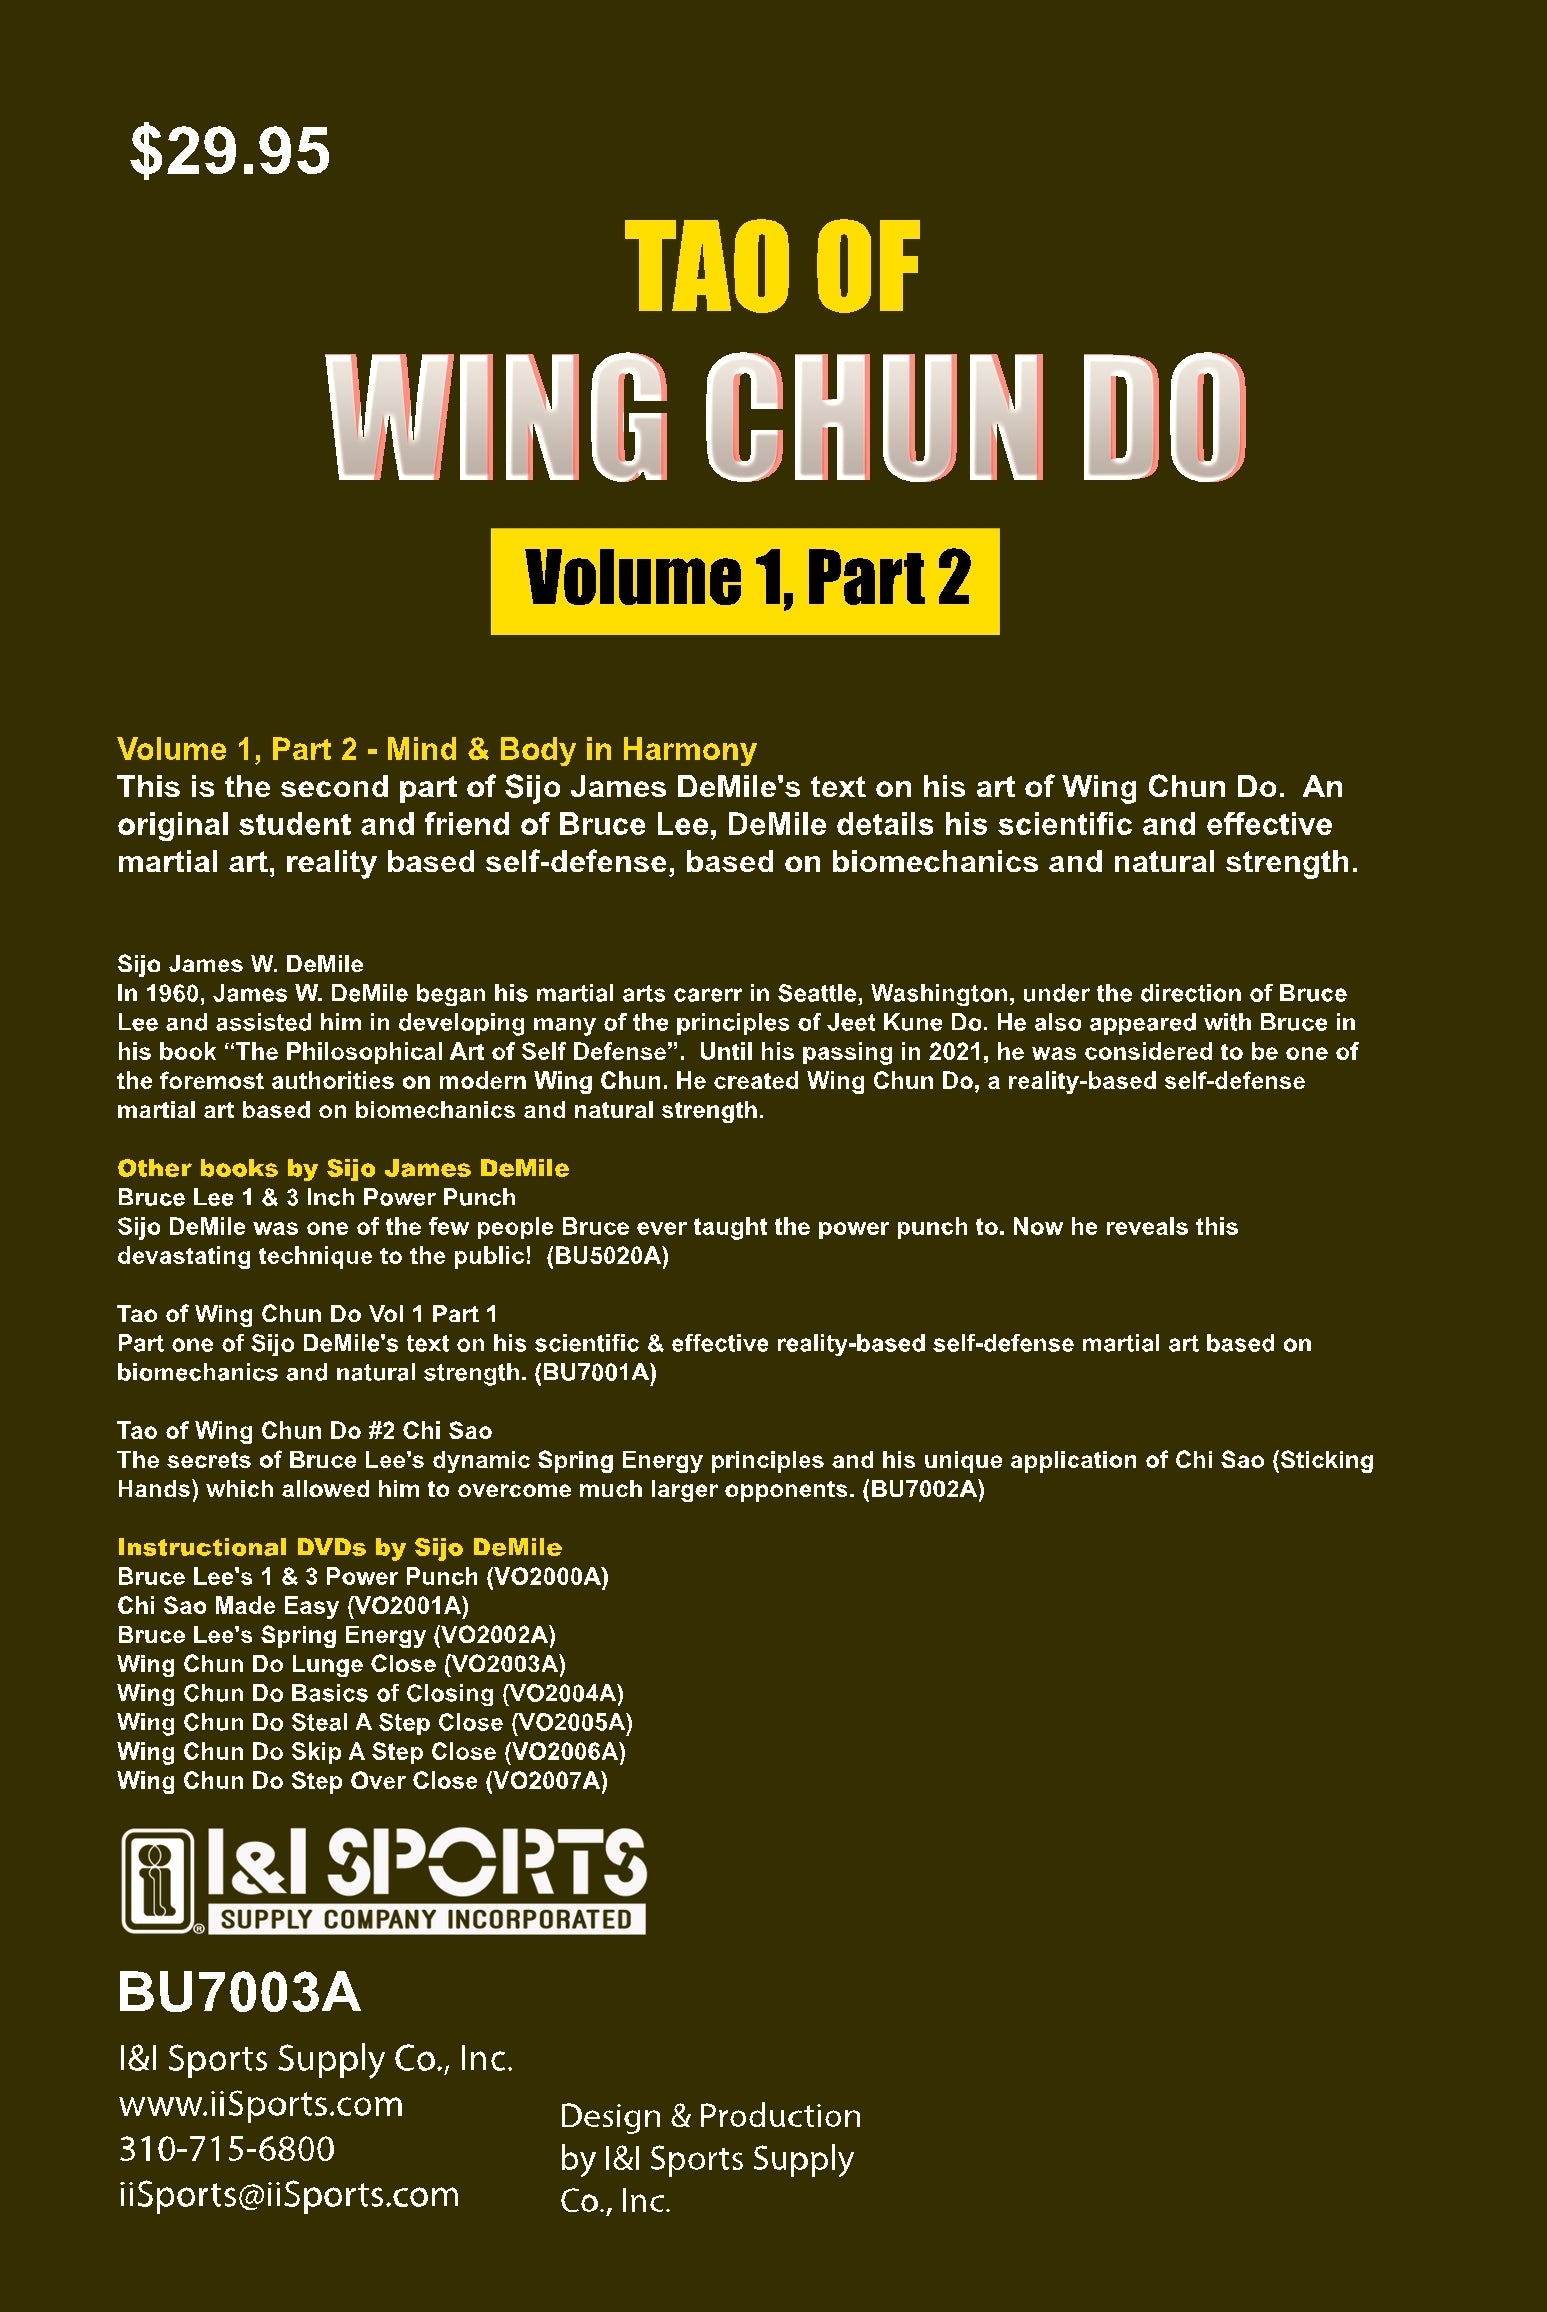 Tao of Wing Chun Do Vol 1 Part 2 Book James DeMile